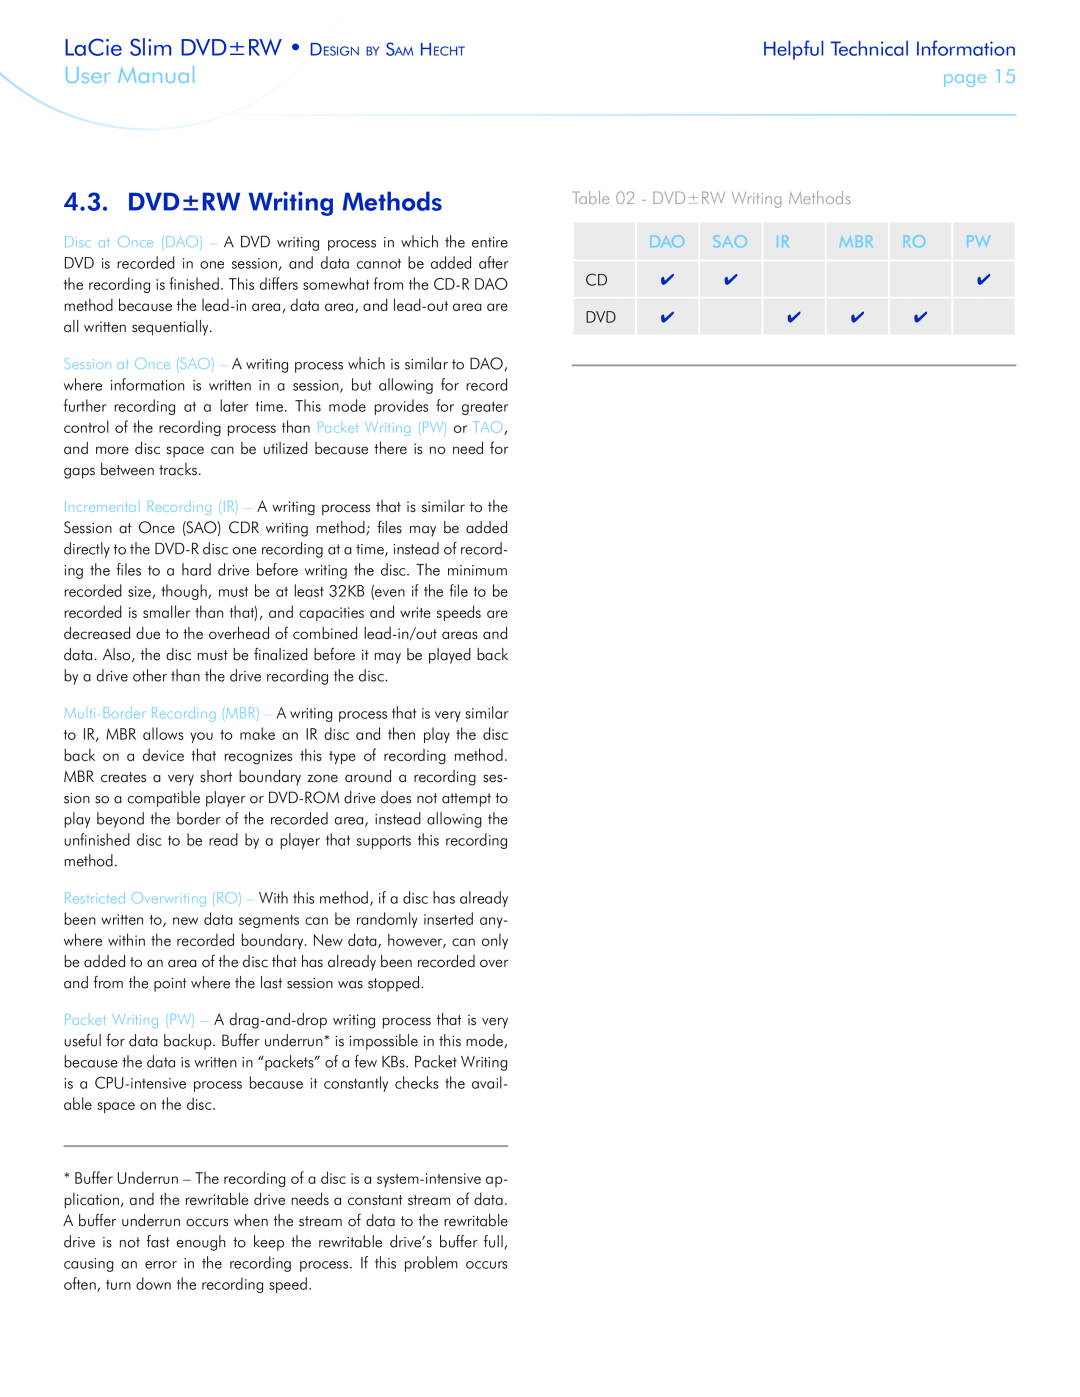 LaCie 301910 user manual DVD±RW Writing Methods, Ro Pw, LaCie Slim DVD±RW Design by Sam Hecht, User Manual, page 